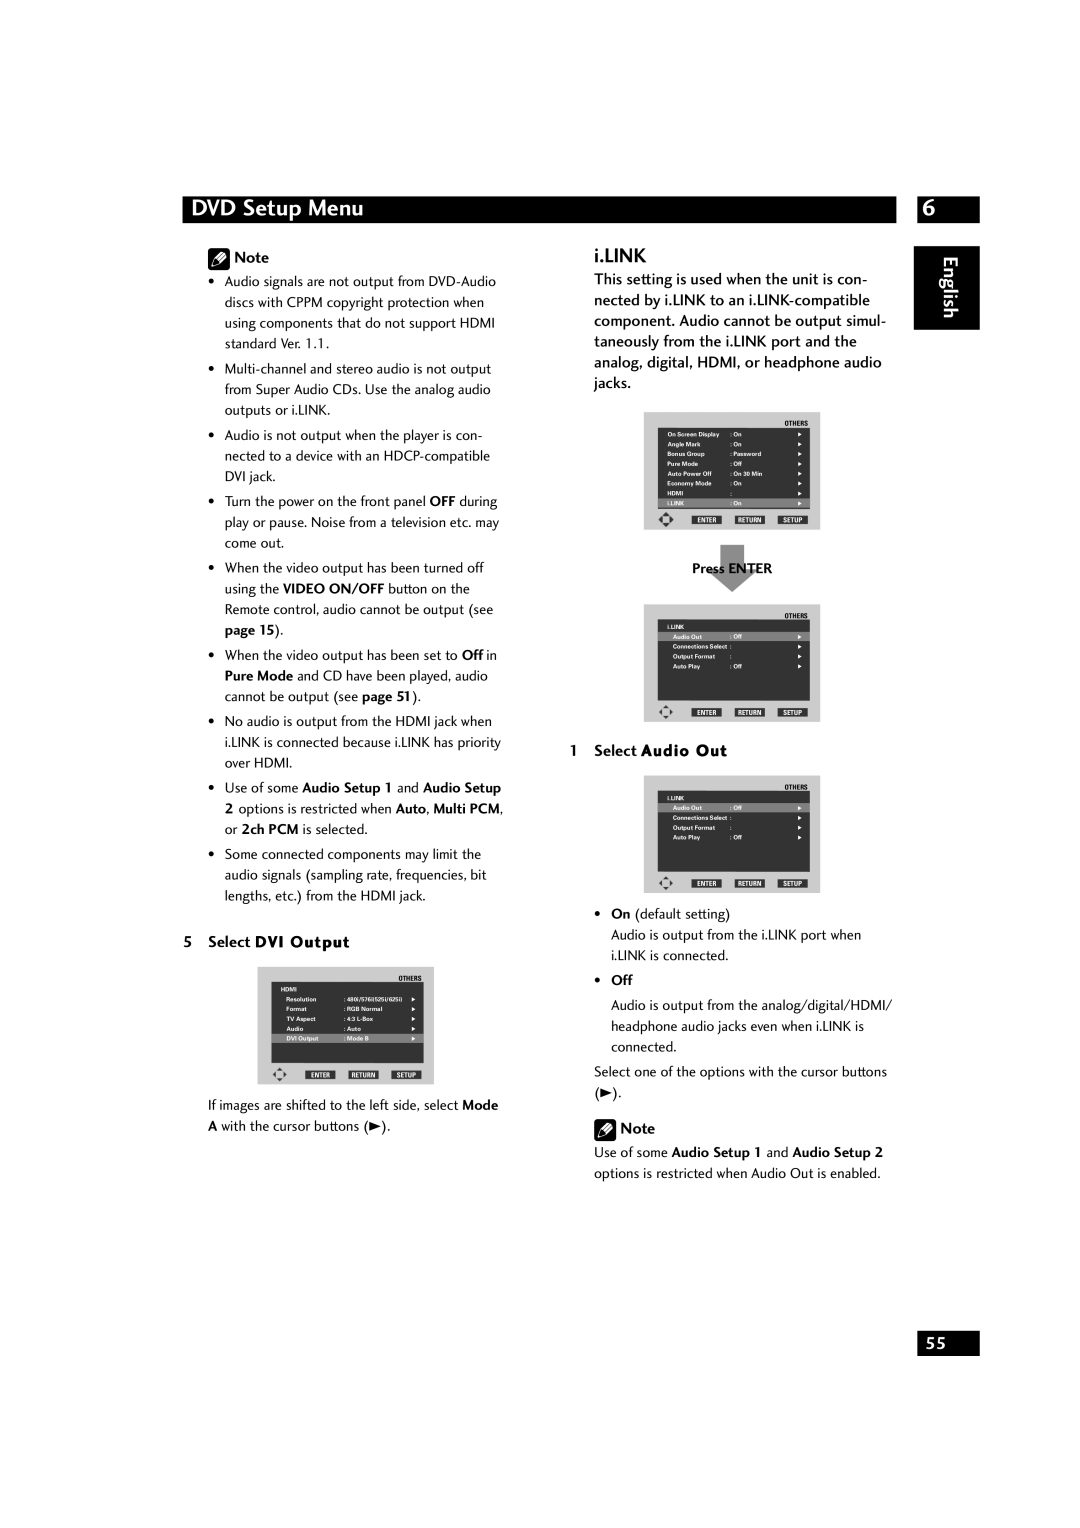 Marantz DV9600 manual i.LINK, Select DVI Output, Select Audio Out, DVD Setup Menu, English, Press ENTER 